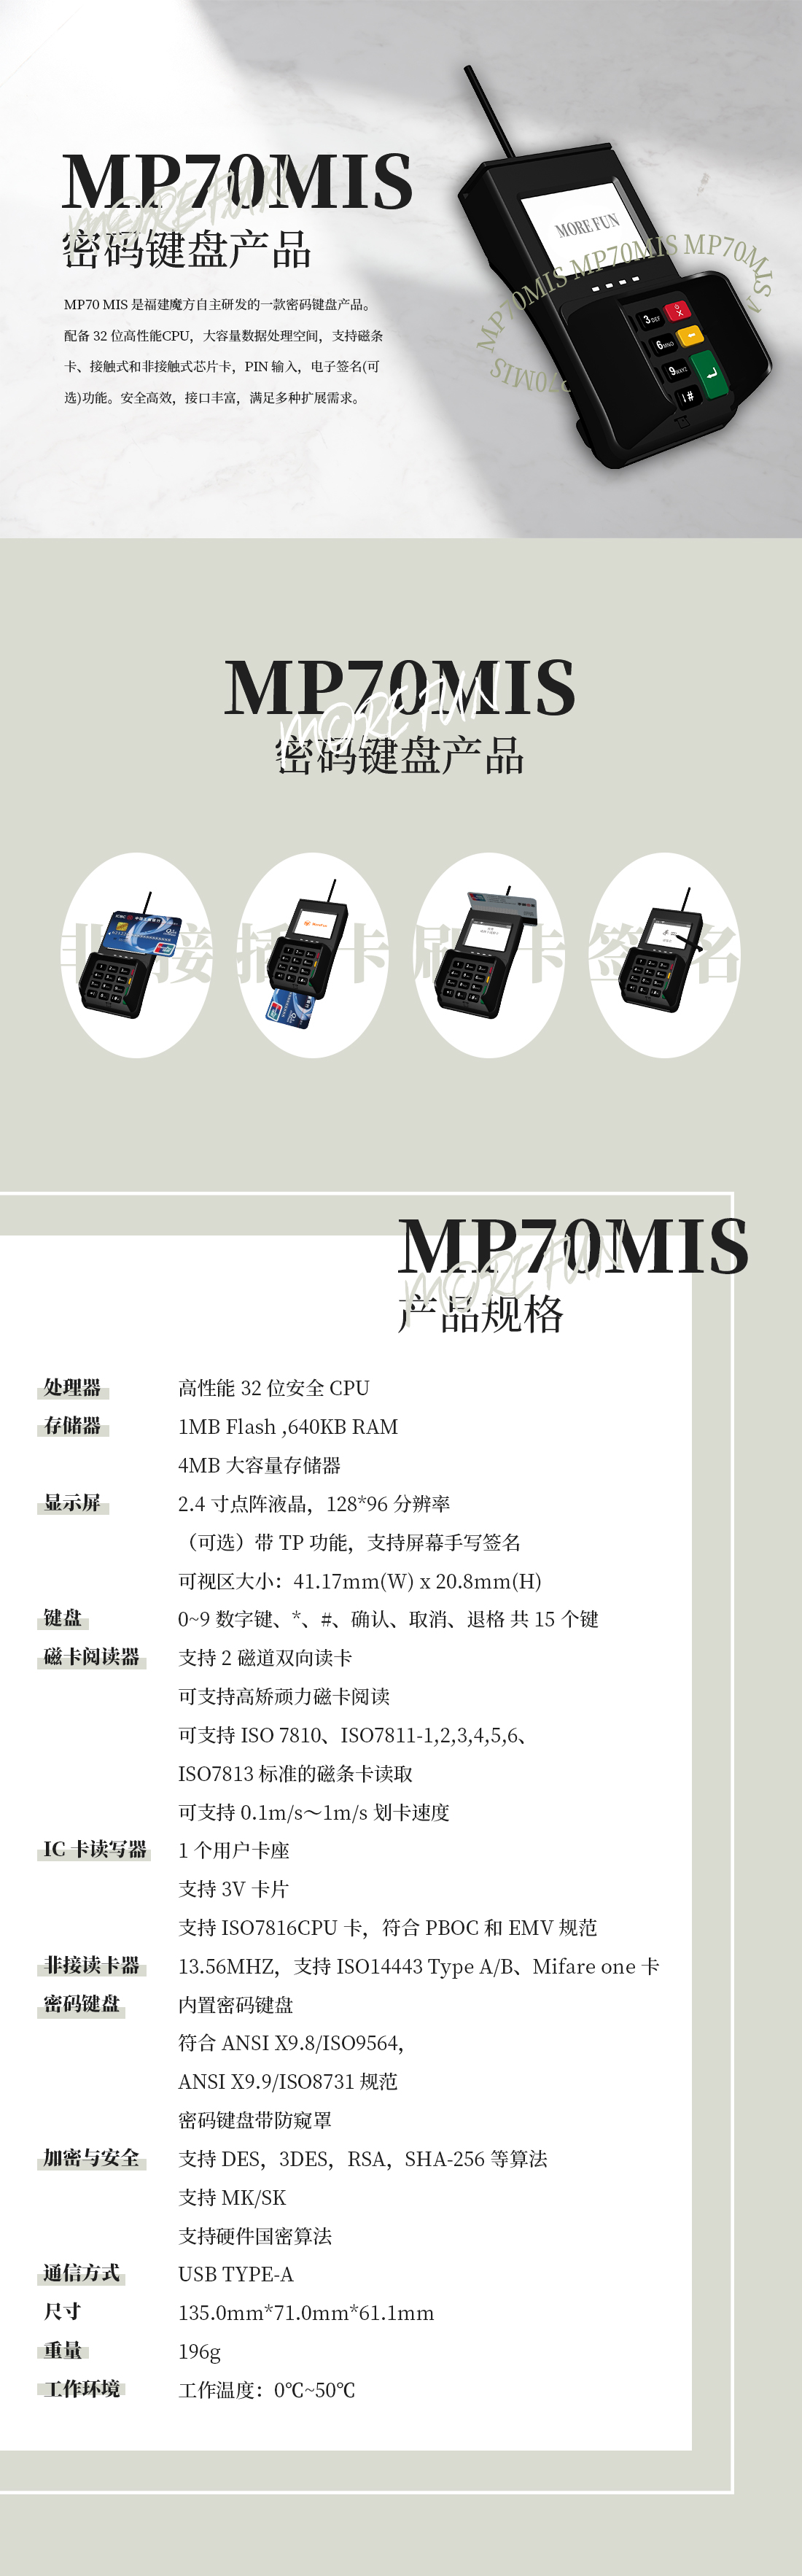 MP70MIS參數圖片.jpg